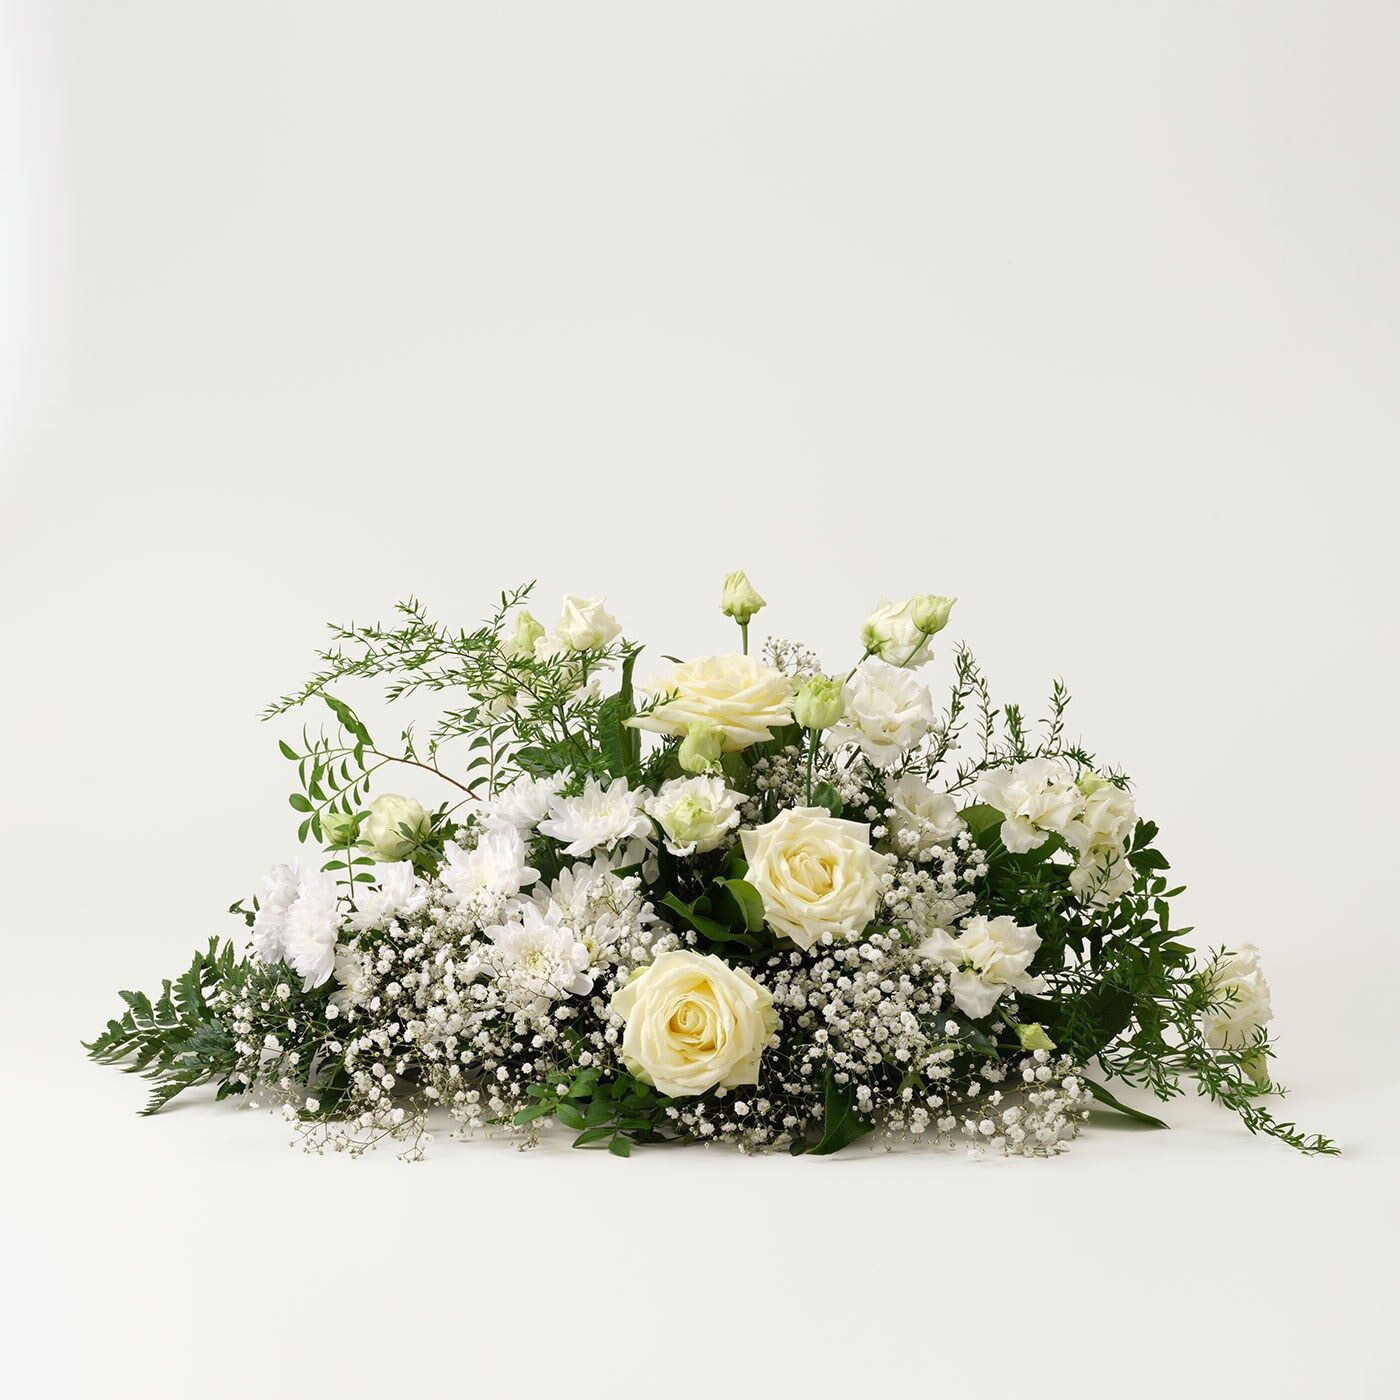 Funeral arrangement in white